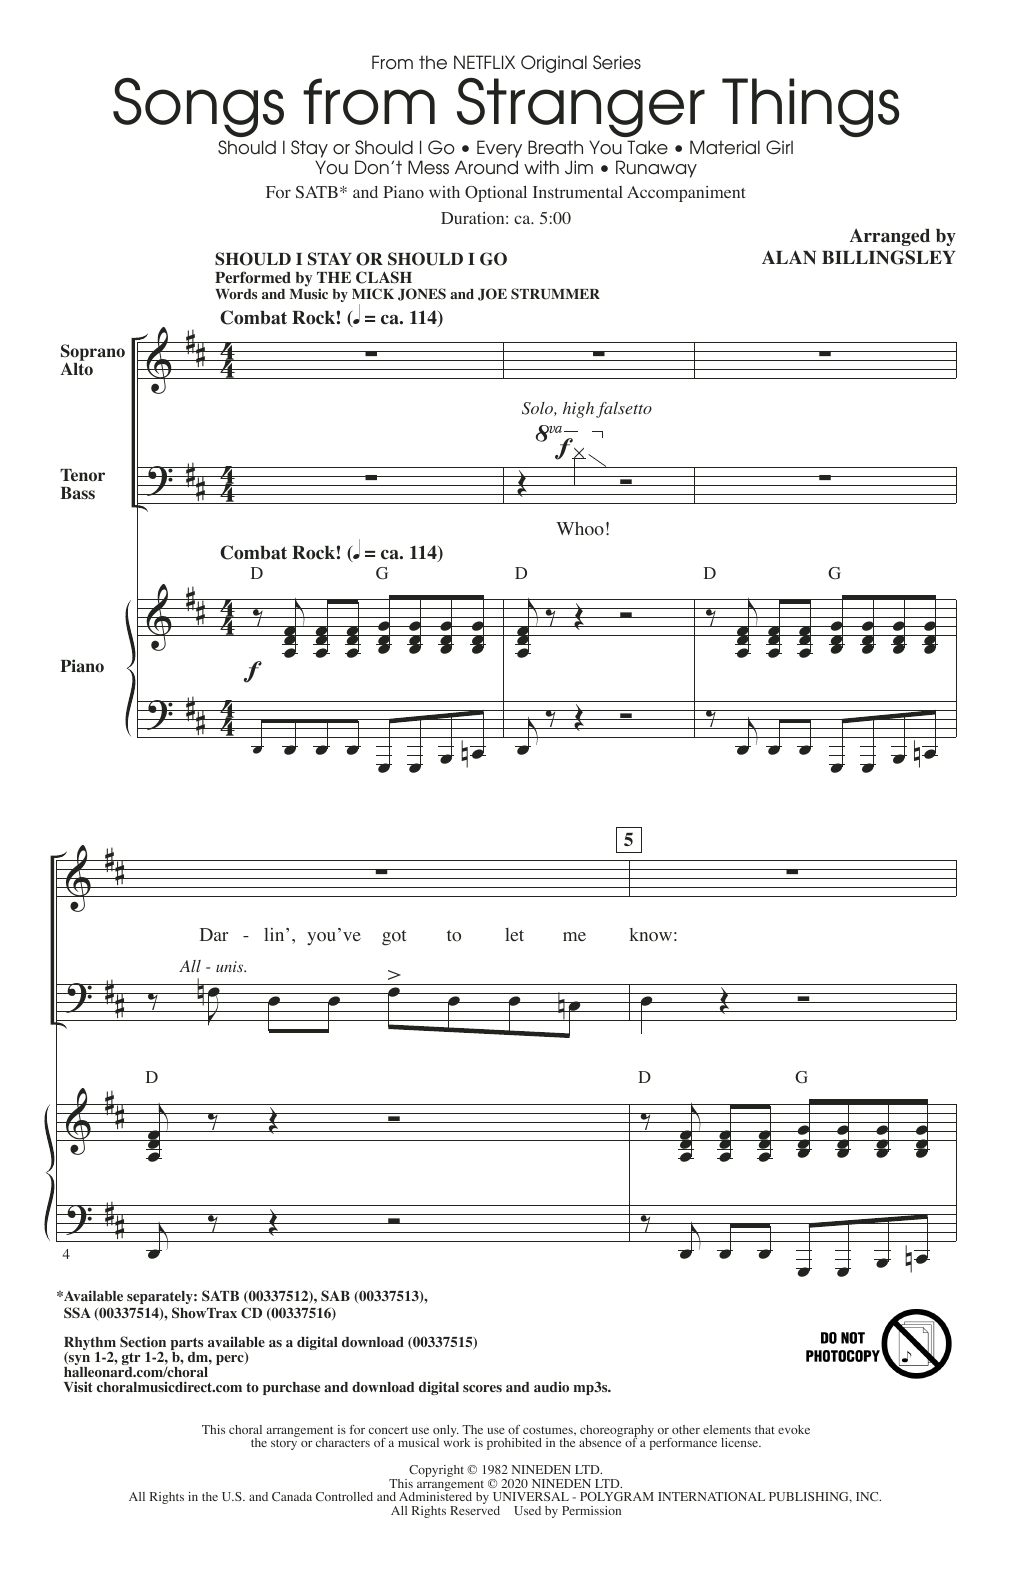 Alan Billingsley Songs from Stranger Things (arr. Alan Billingsley) Sheet Music Notes & Chords for SATB Choir - Download or Print PDF